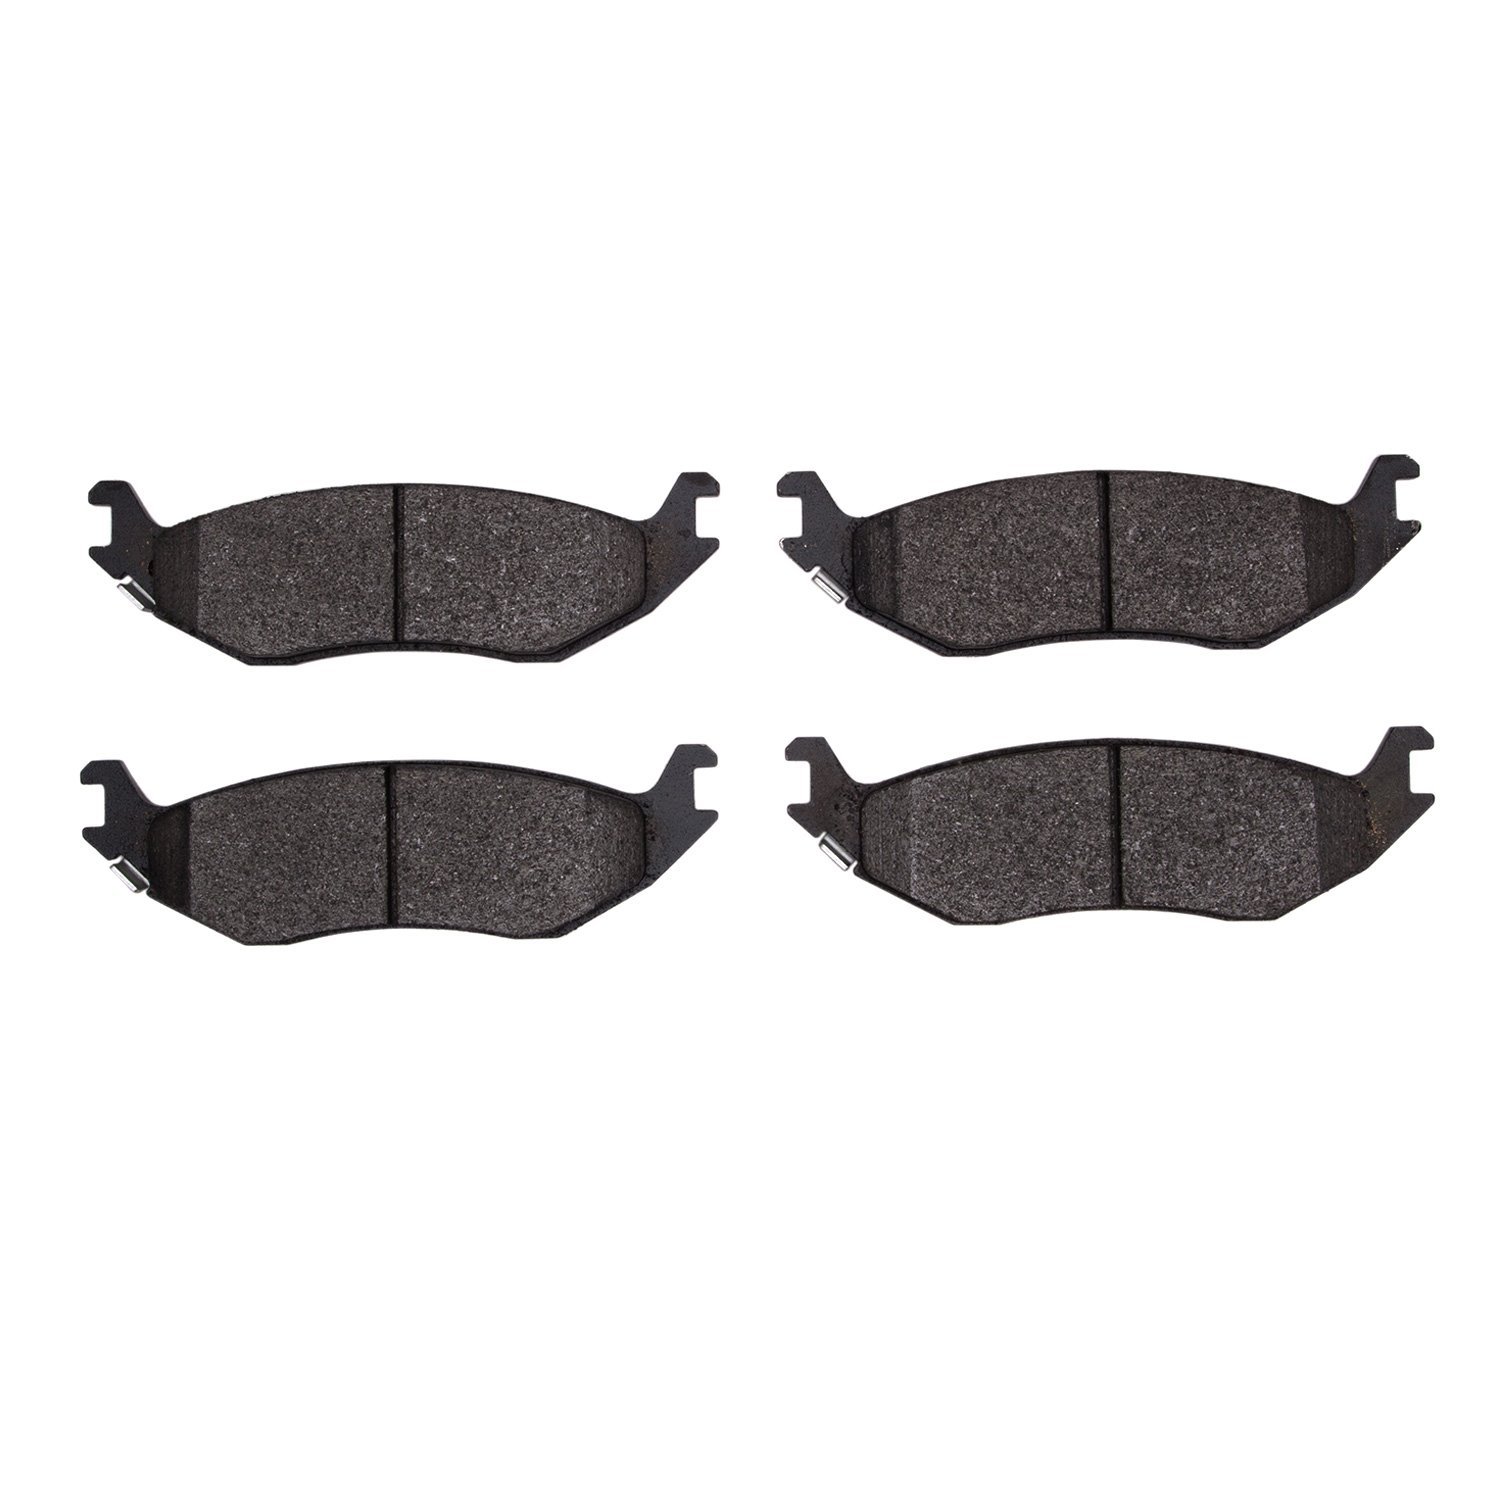 Semi-Metallic Brake Pads, Fits Select Mopar, Position: Rear